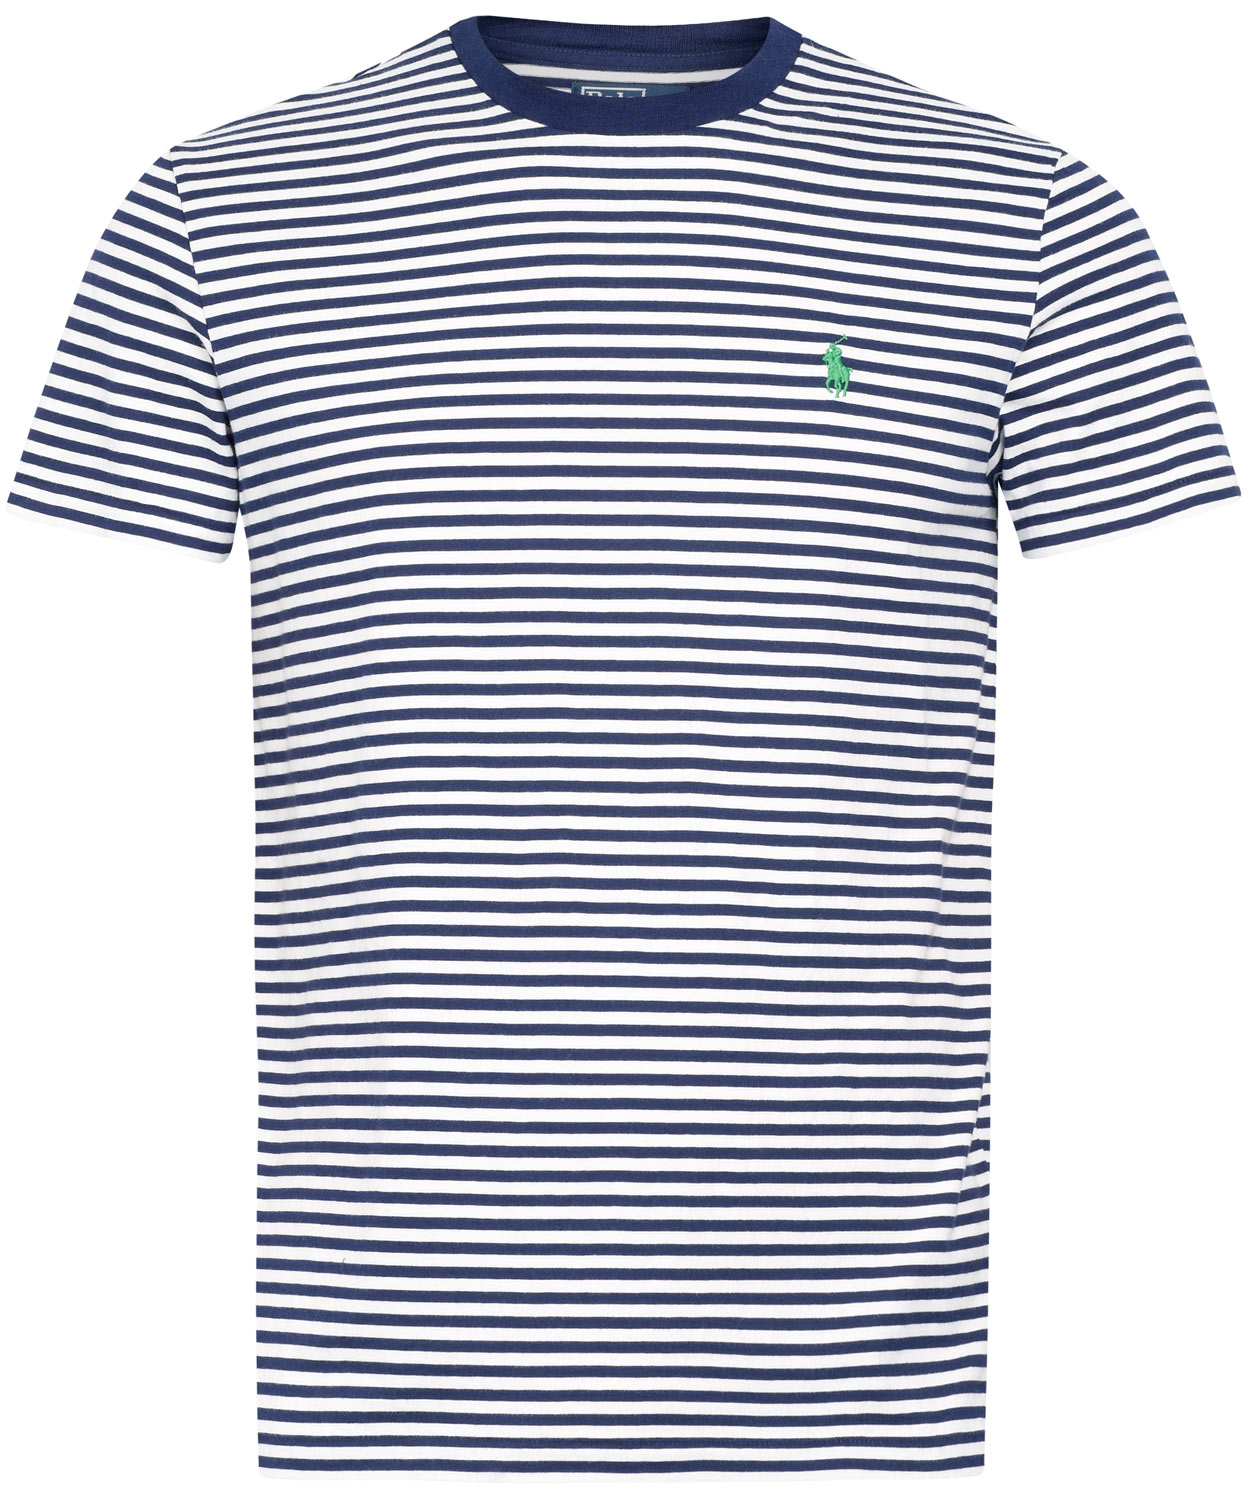 Lyst - Polo Ralph Lauren Navy Nautical Stripe T-shirt in Blue for Men